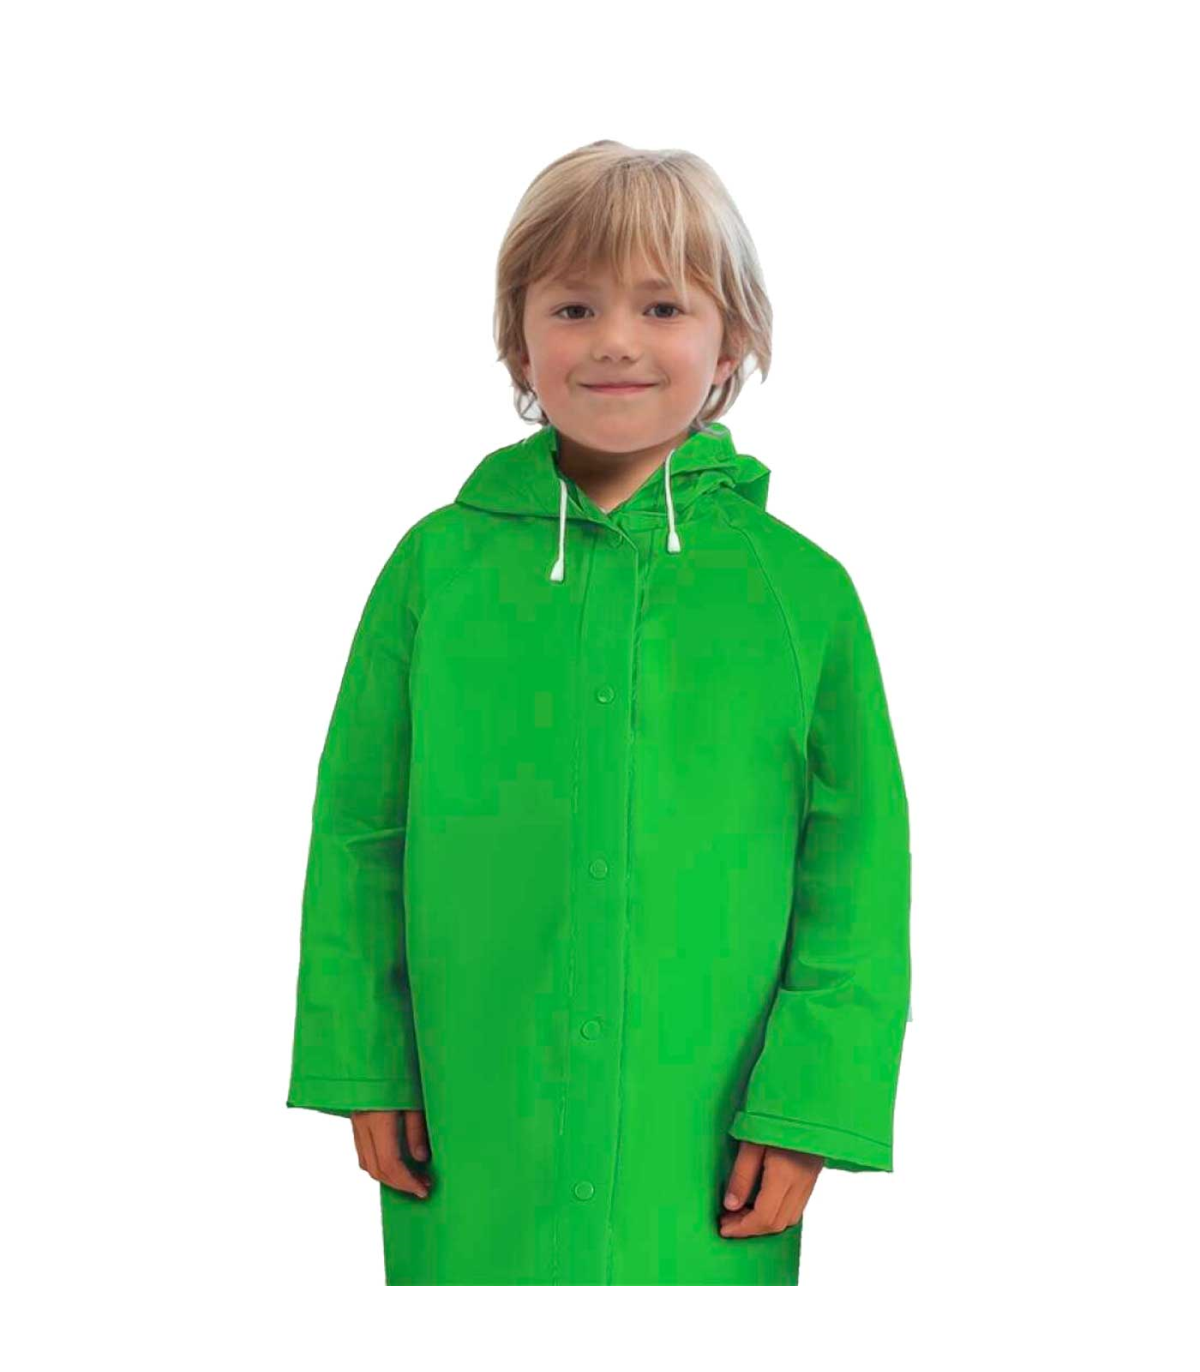 Tradineur - Chubasquero con capucha para niños - Fabricado al 100